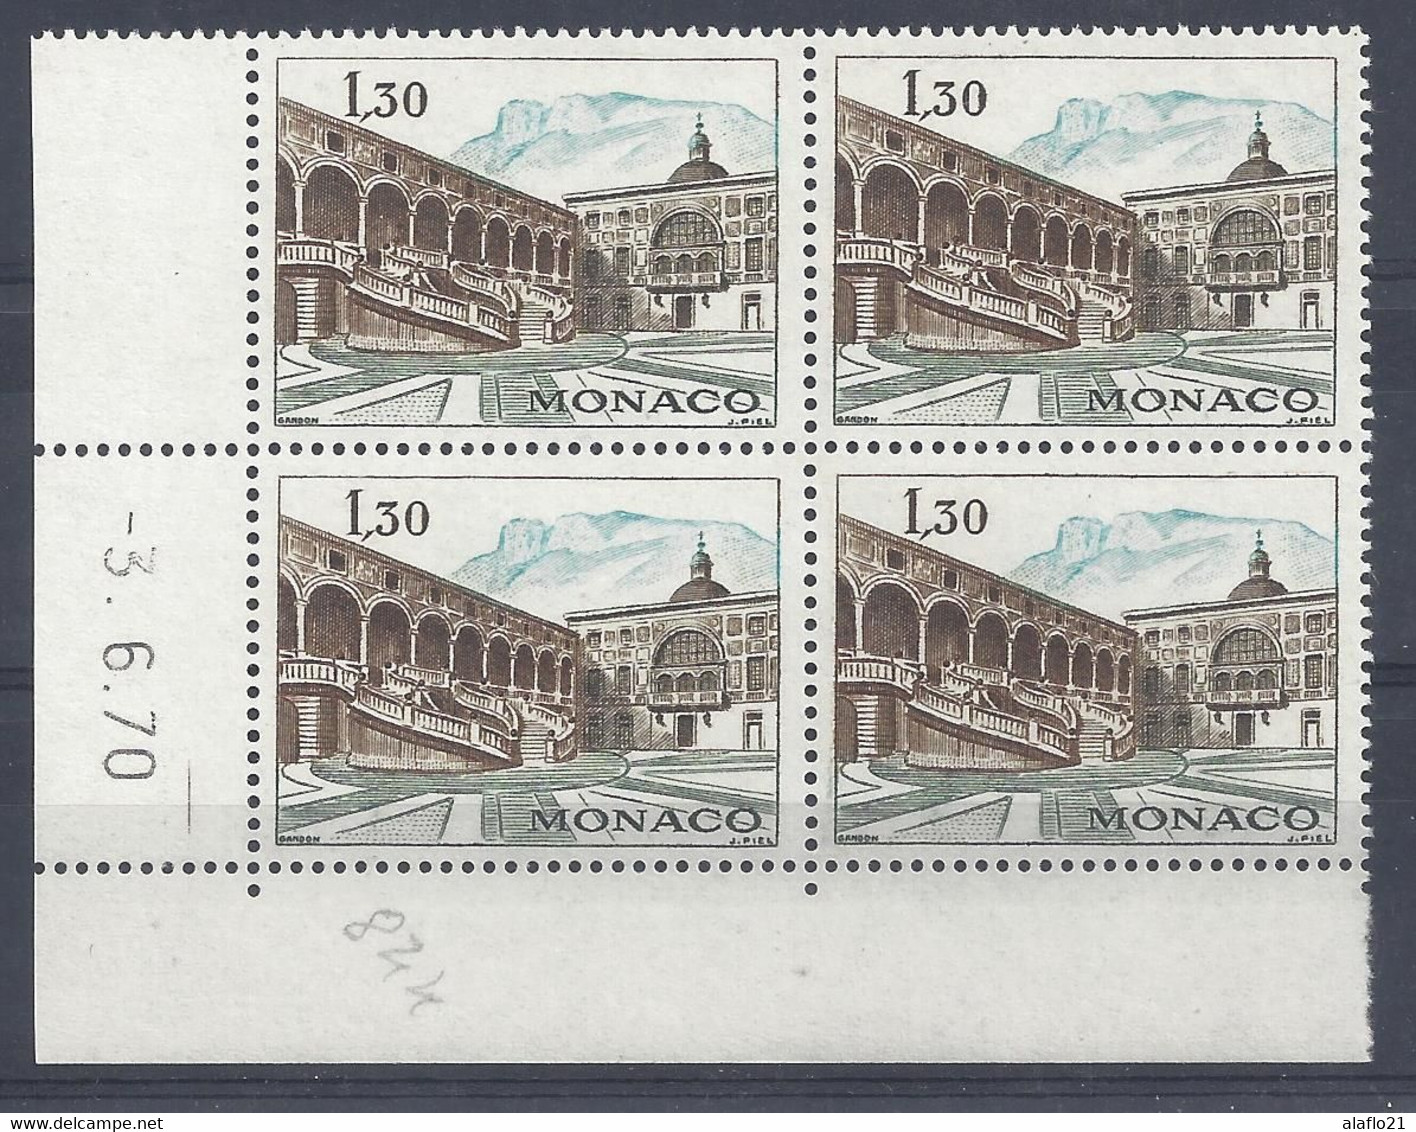 MONACO N° 844 - Bloc De 4 COIN DATE - NEUF SANS CHARNIERE - 3/6/70 - Unused Stamps